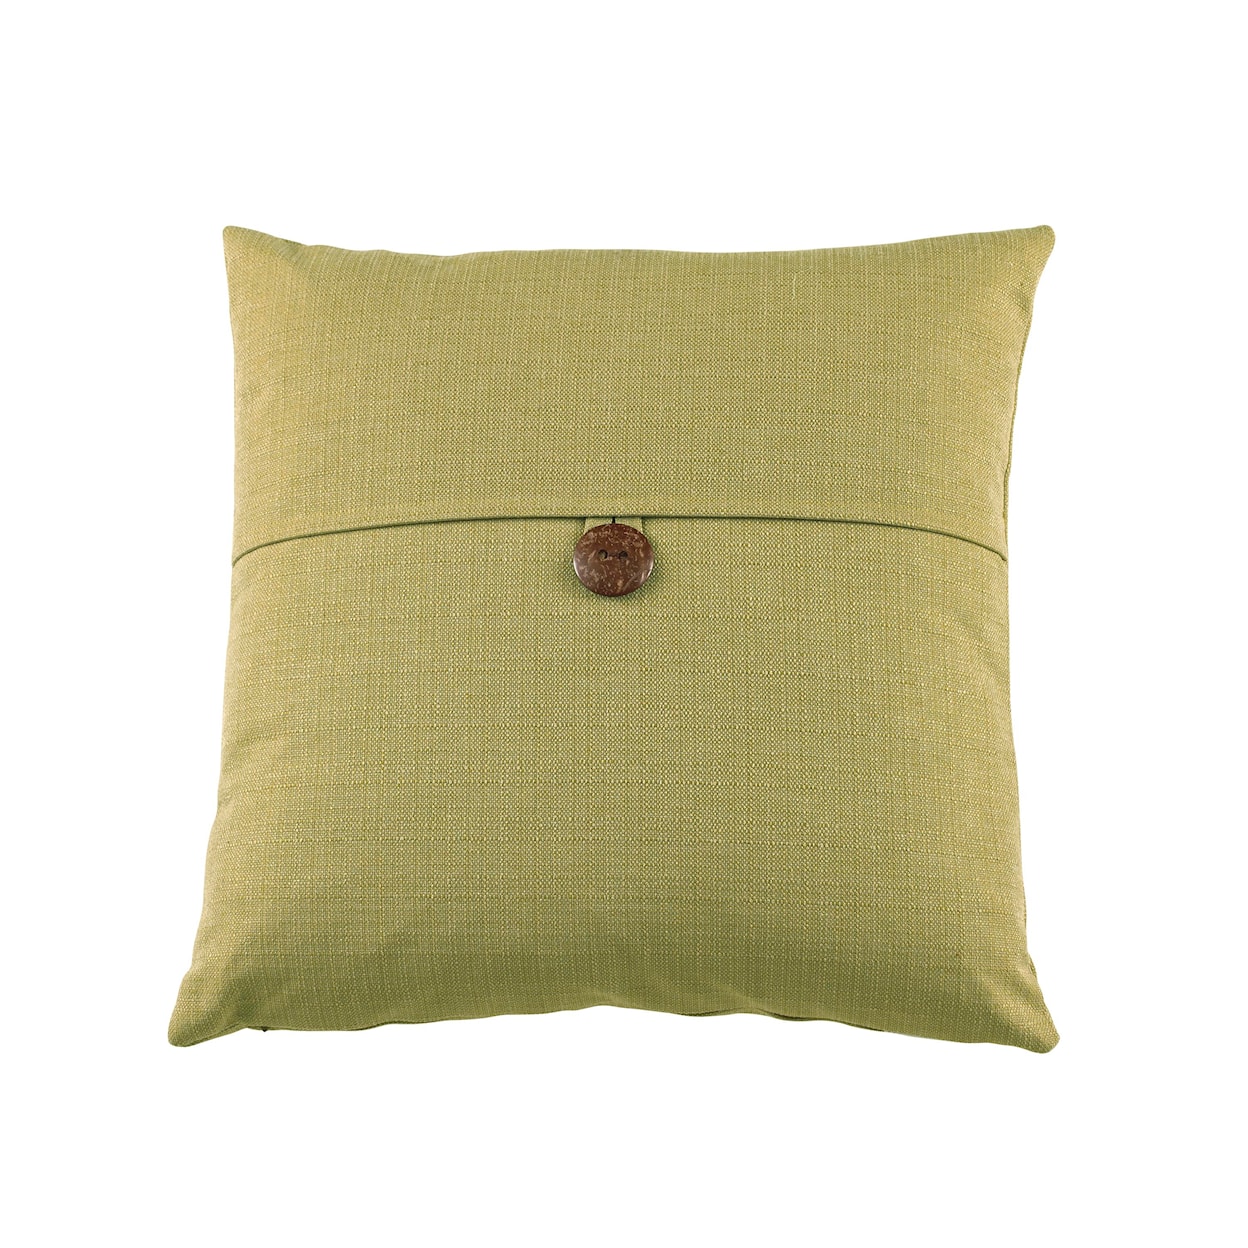 Ashley Furniture Signature Design Pillows Jolissa - Spring, Set of 6